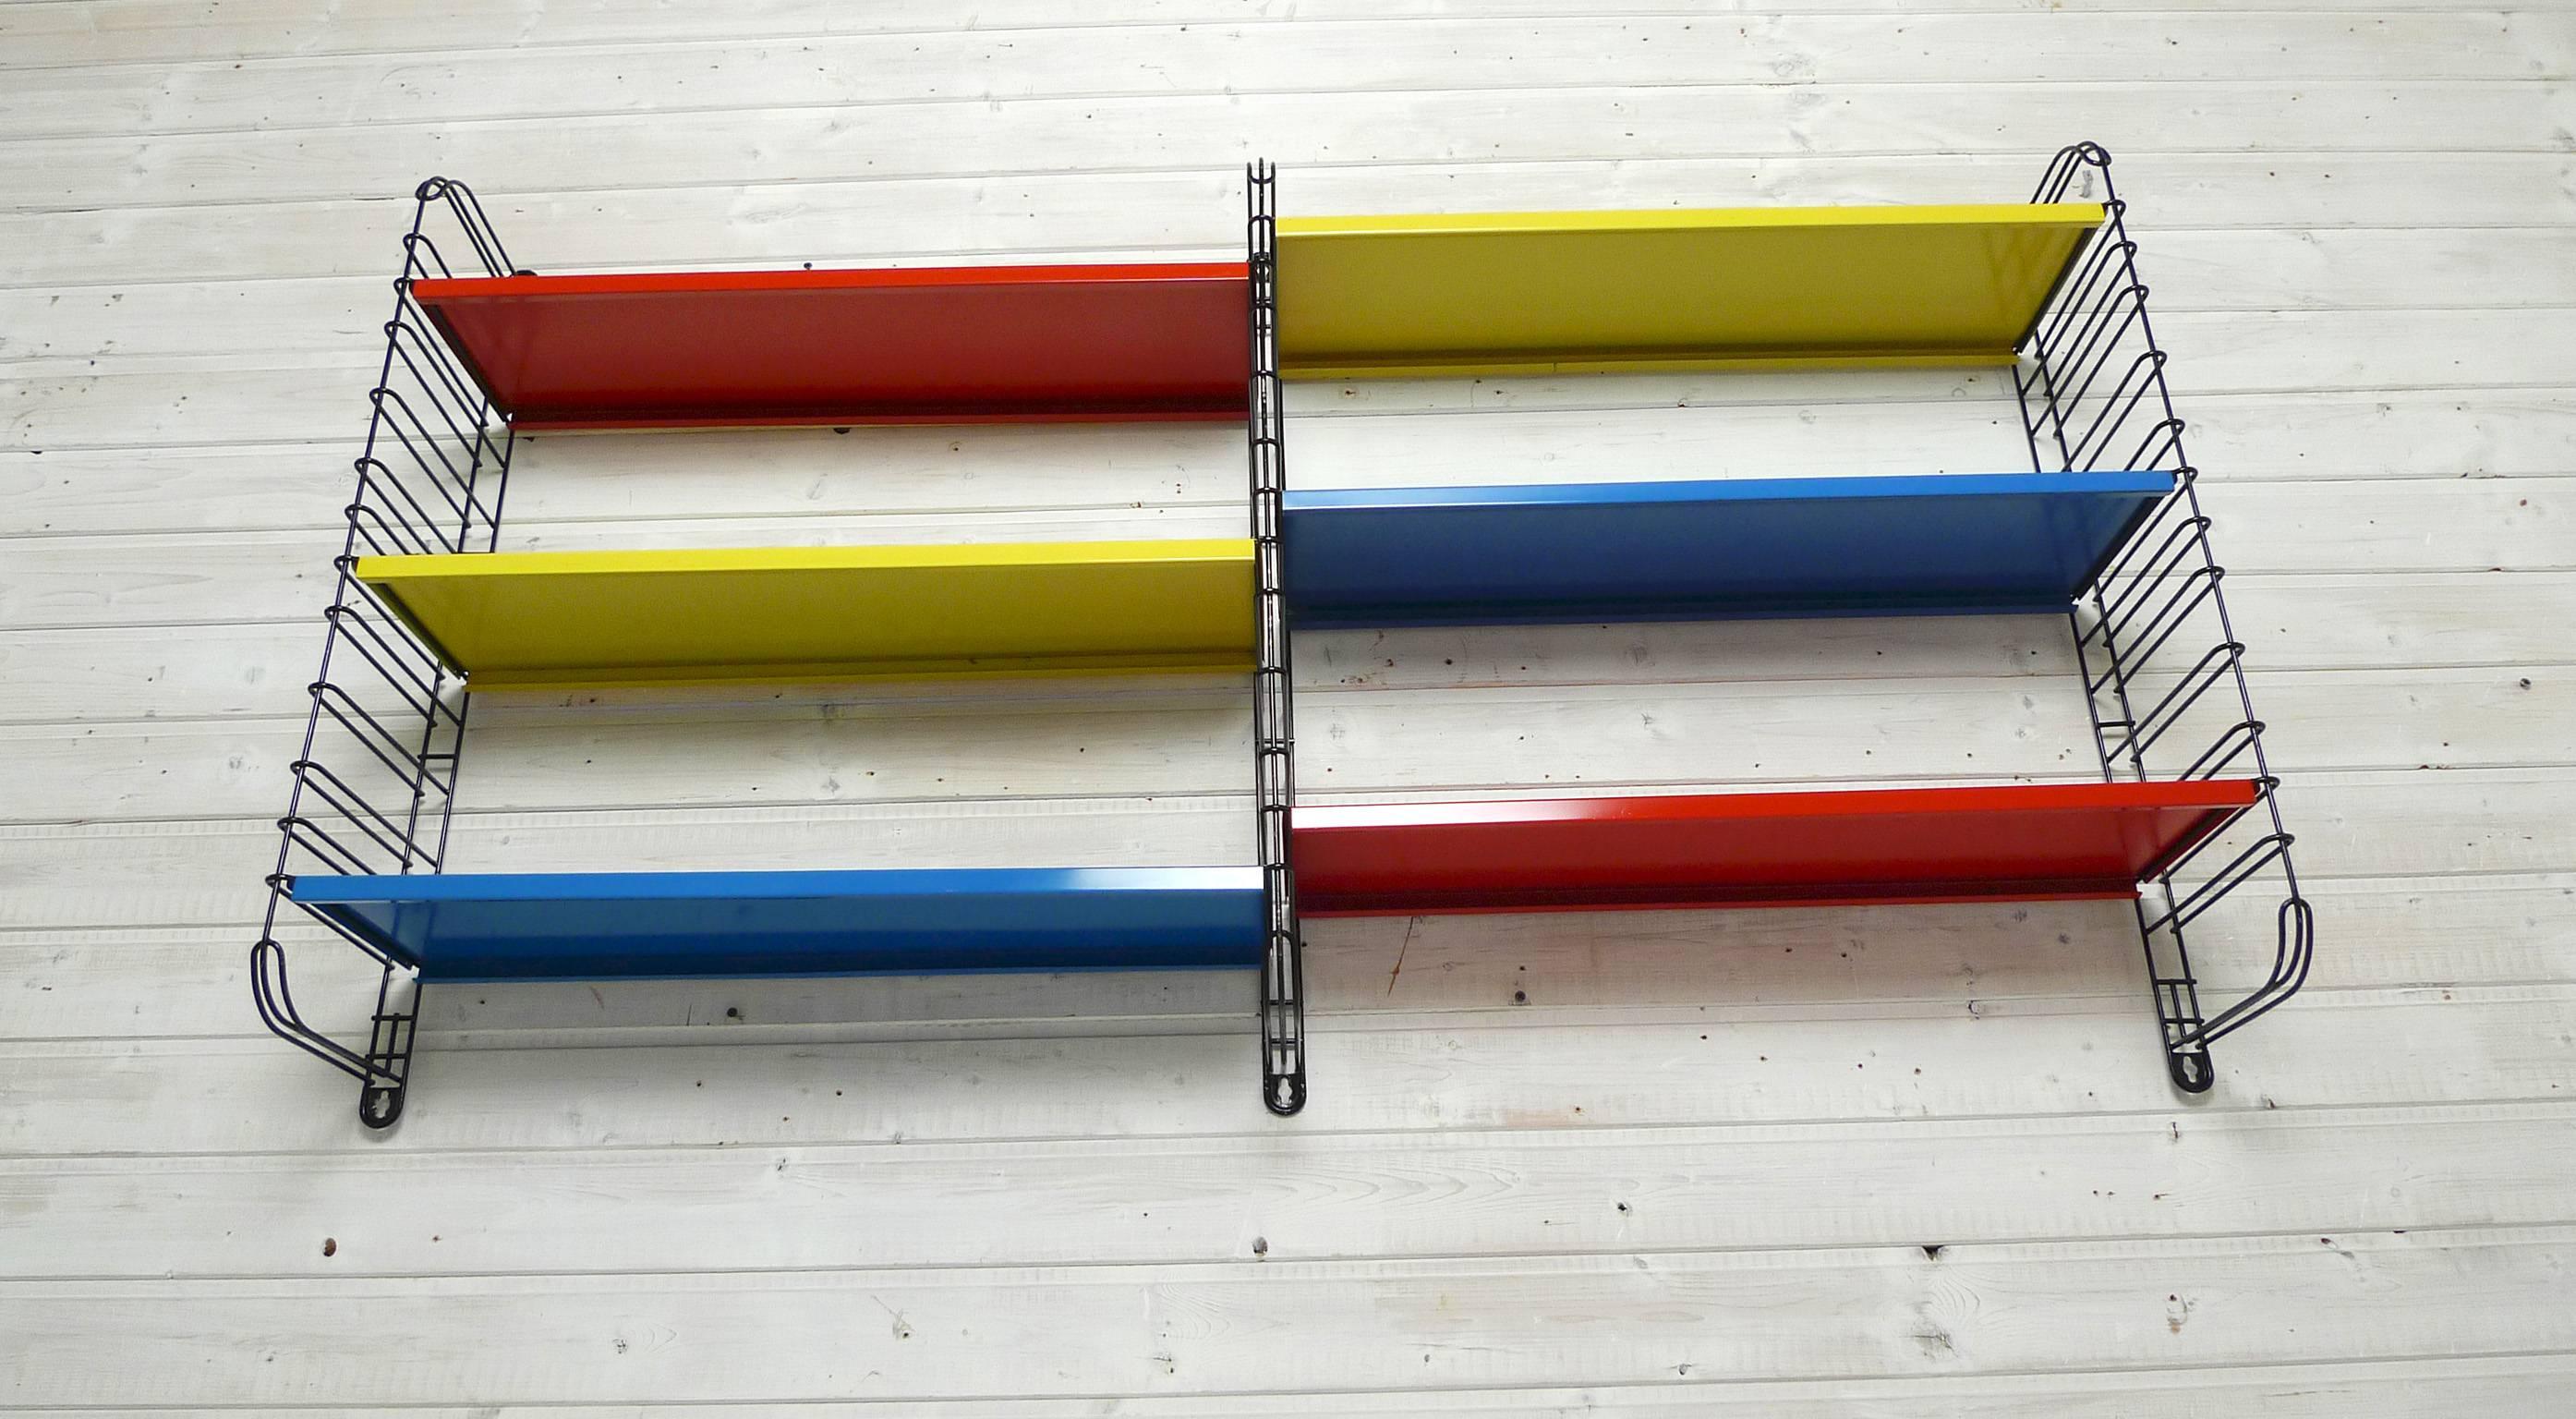 Dutch Multicolored Metal Rack by Adrian Dekker for Tomado, Netherlands, 1953